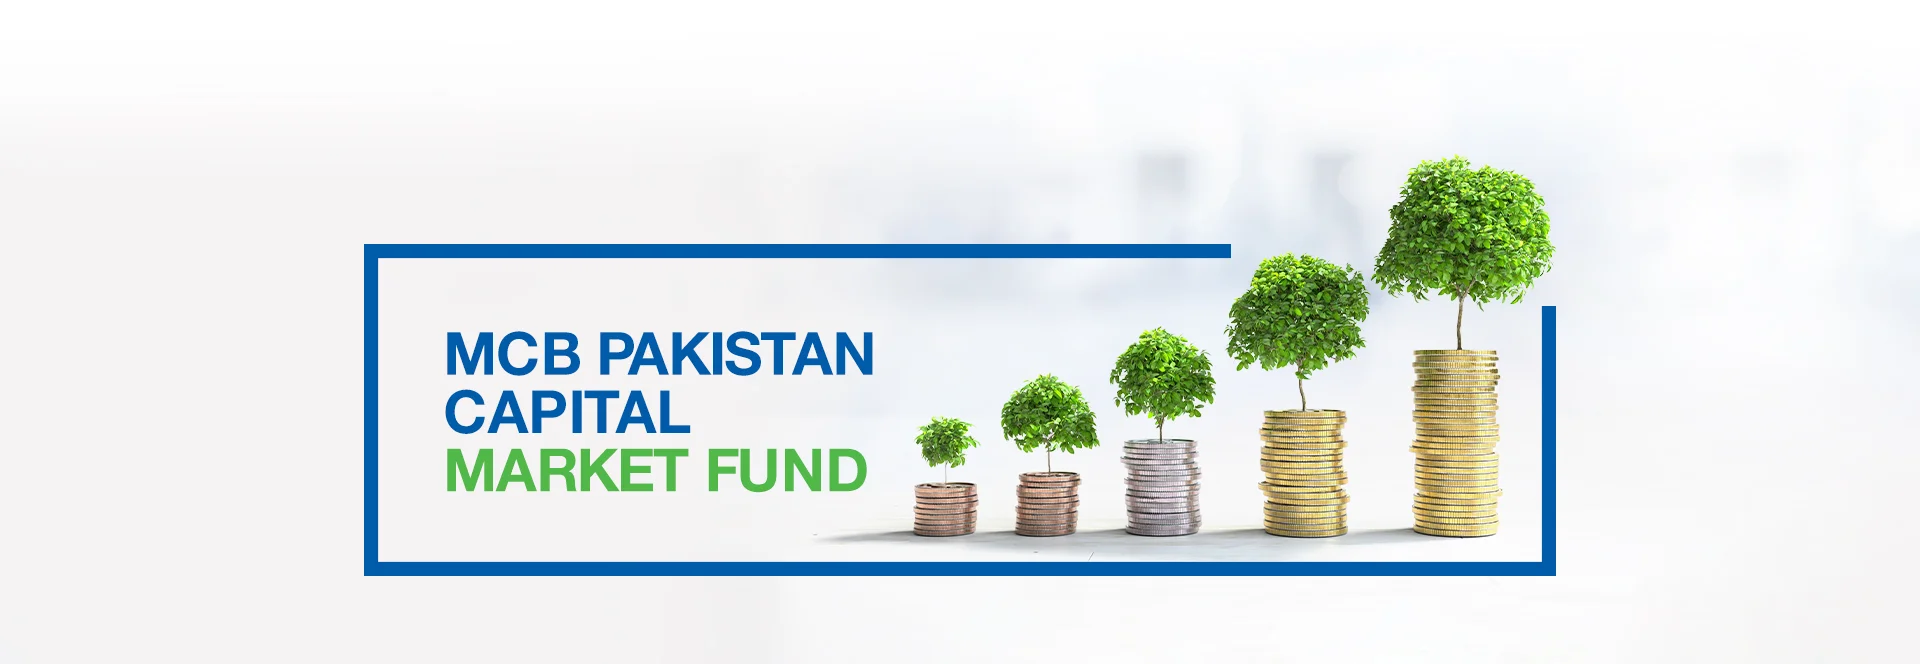 MCB Pakistan Capital Market Fund